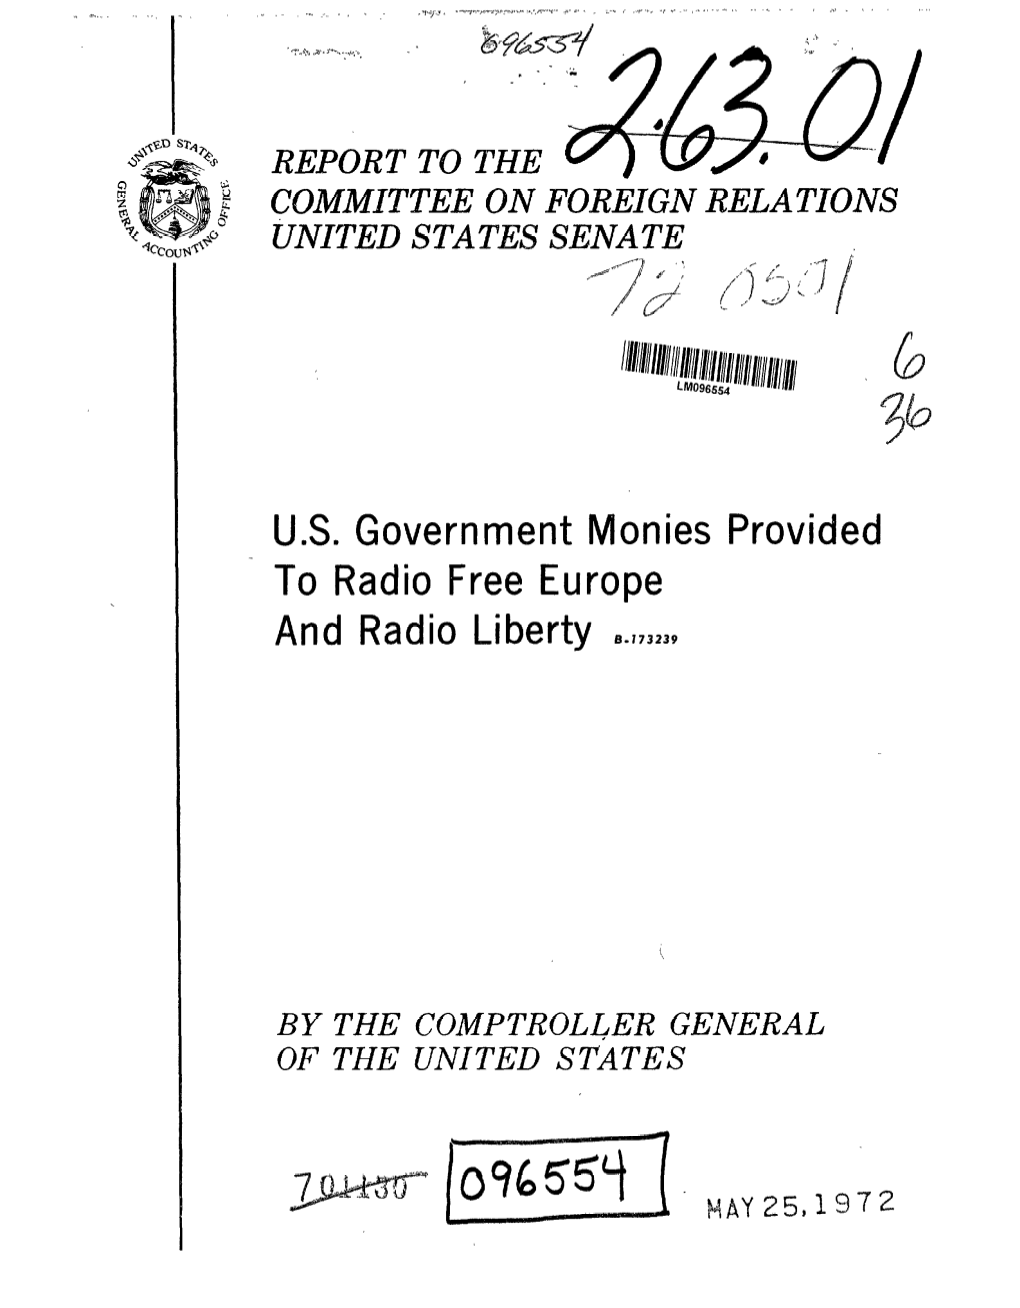 B-173239 U.S. Government Monies Provided to Radio Free Europe And